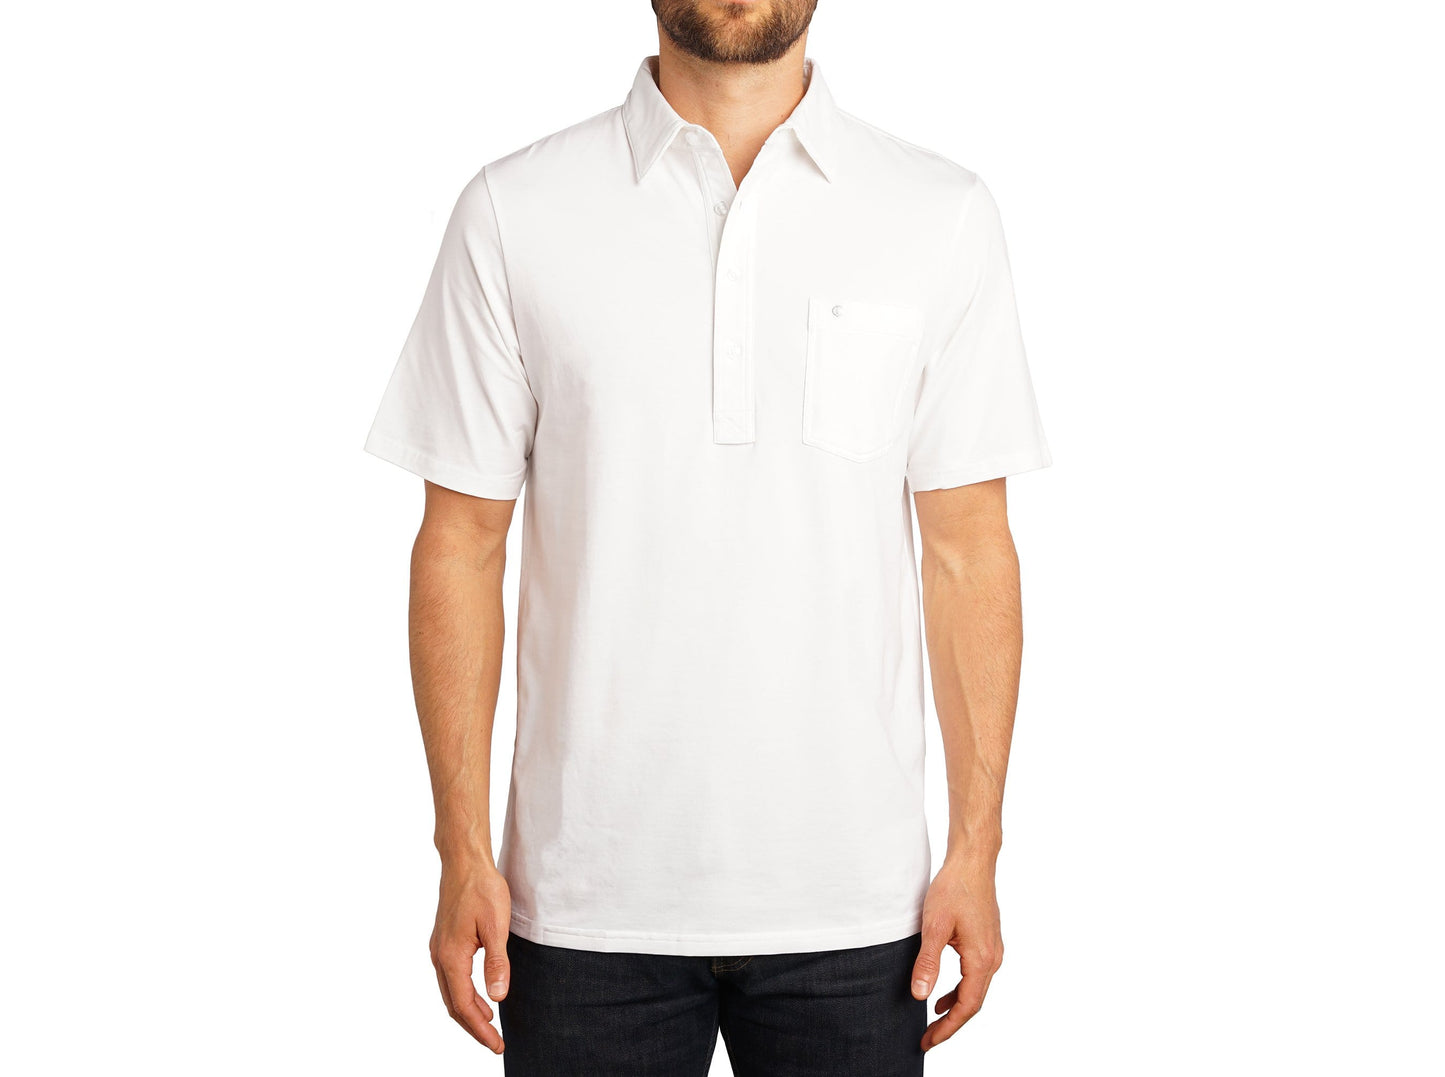 Top-Shelf Players Shirt - Great White